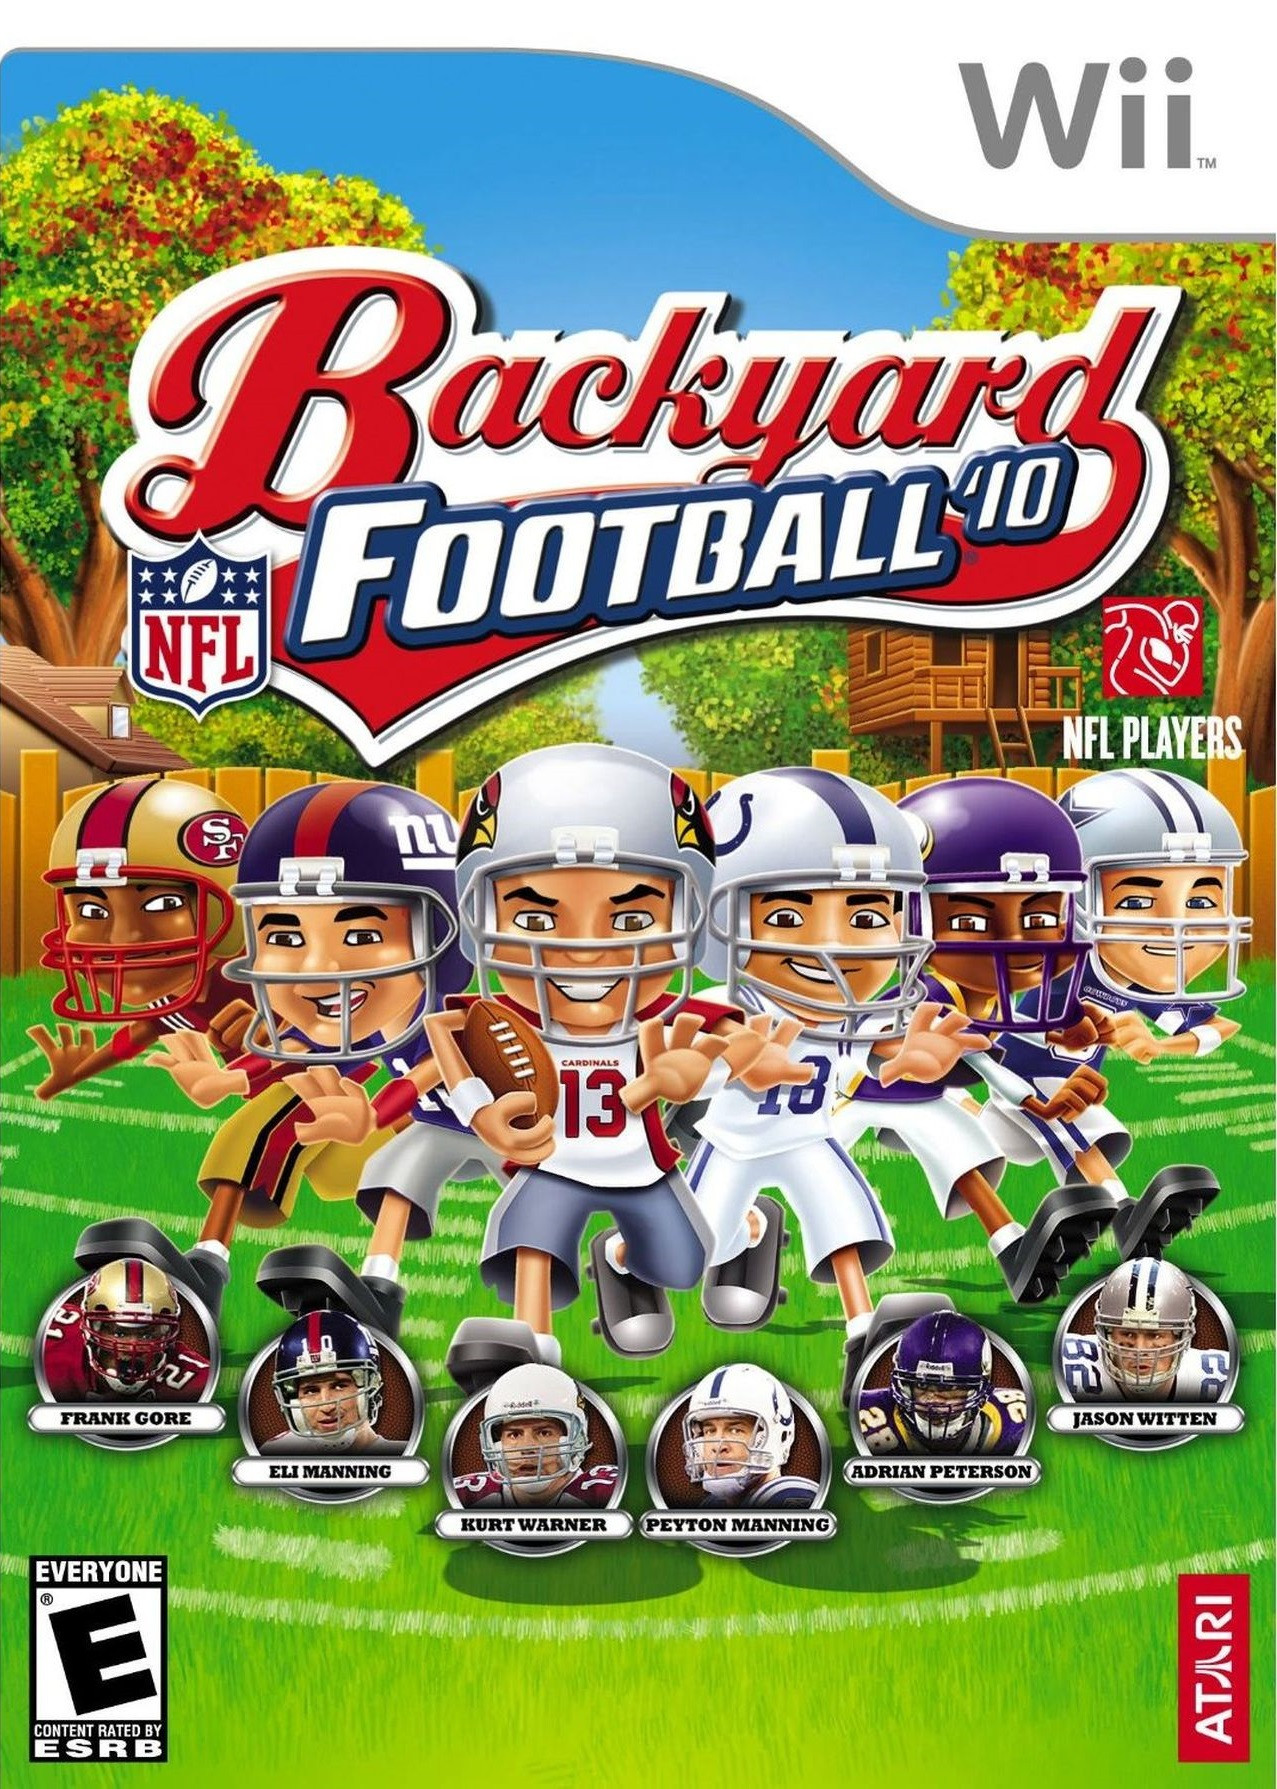 Backyard Football Rom
 Backyard Football 10 Nintendo Wii Wii ISOs ROM Download